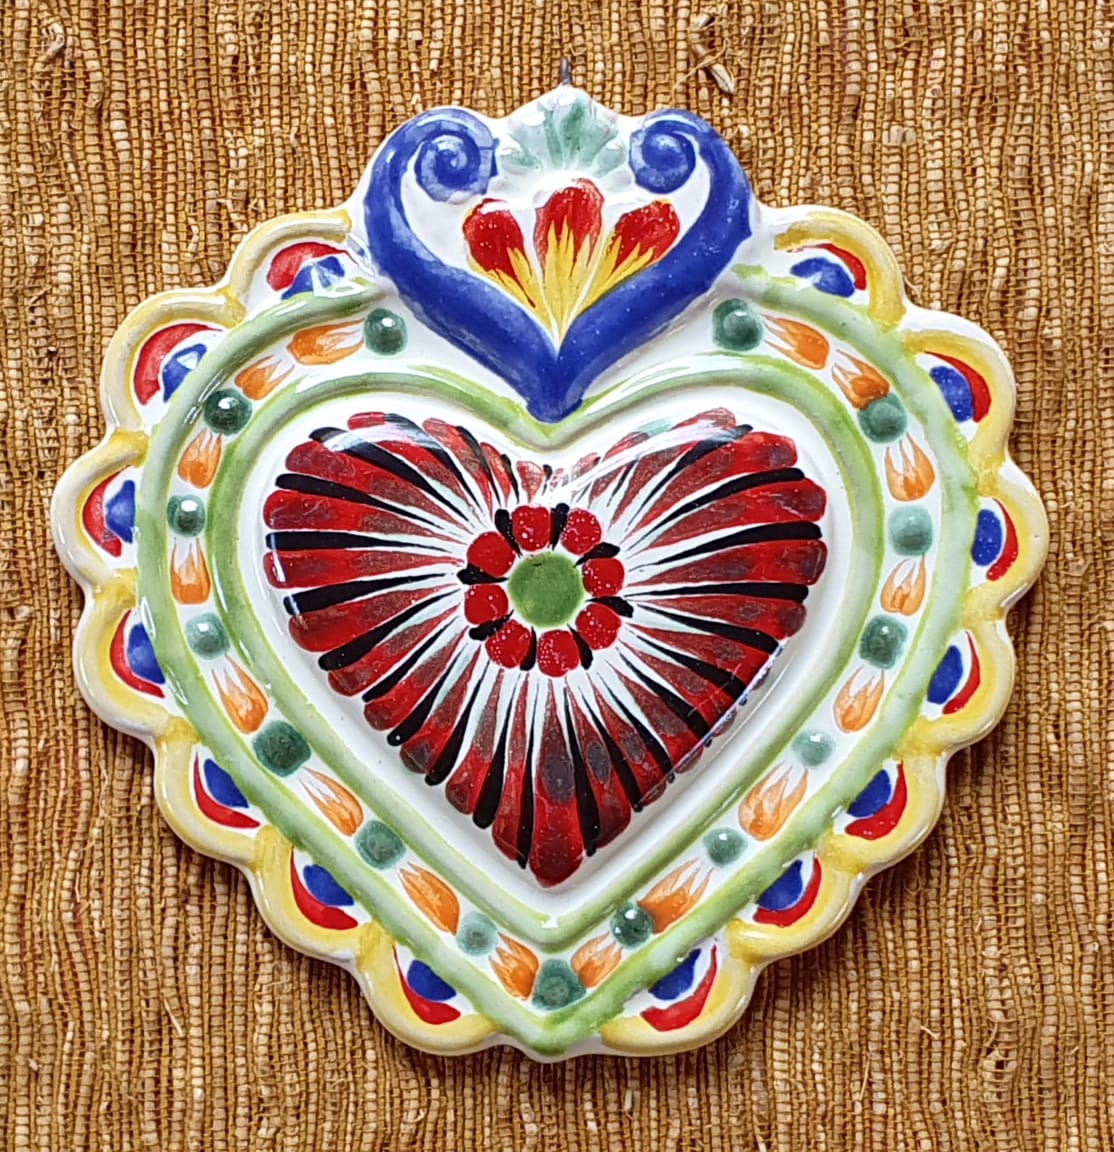 Ornament Love Heart 5x5 in Flat MultiColors